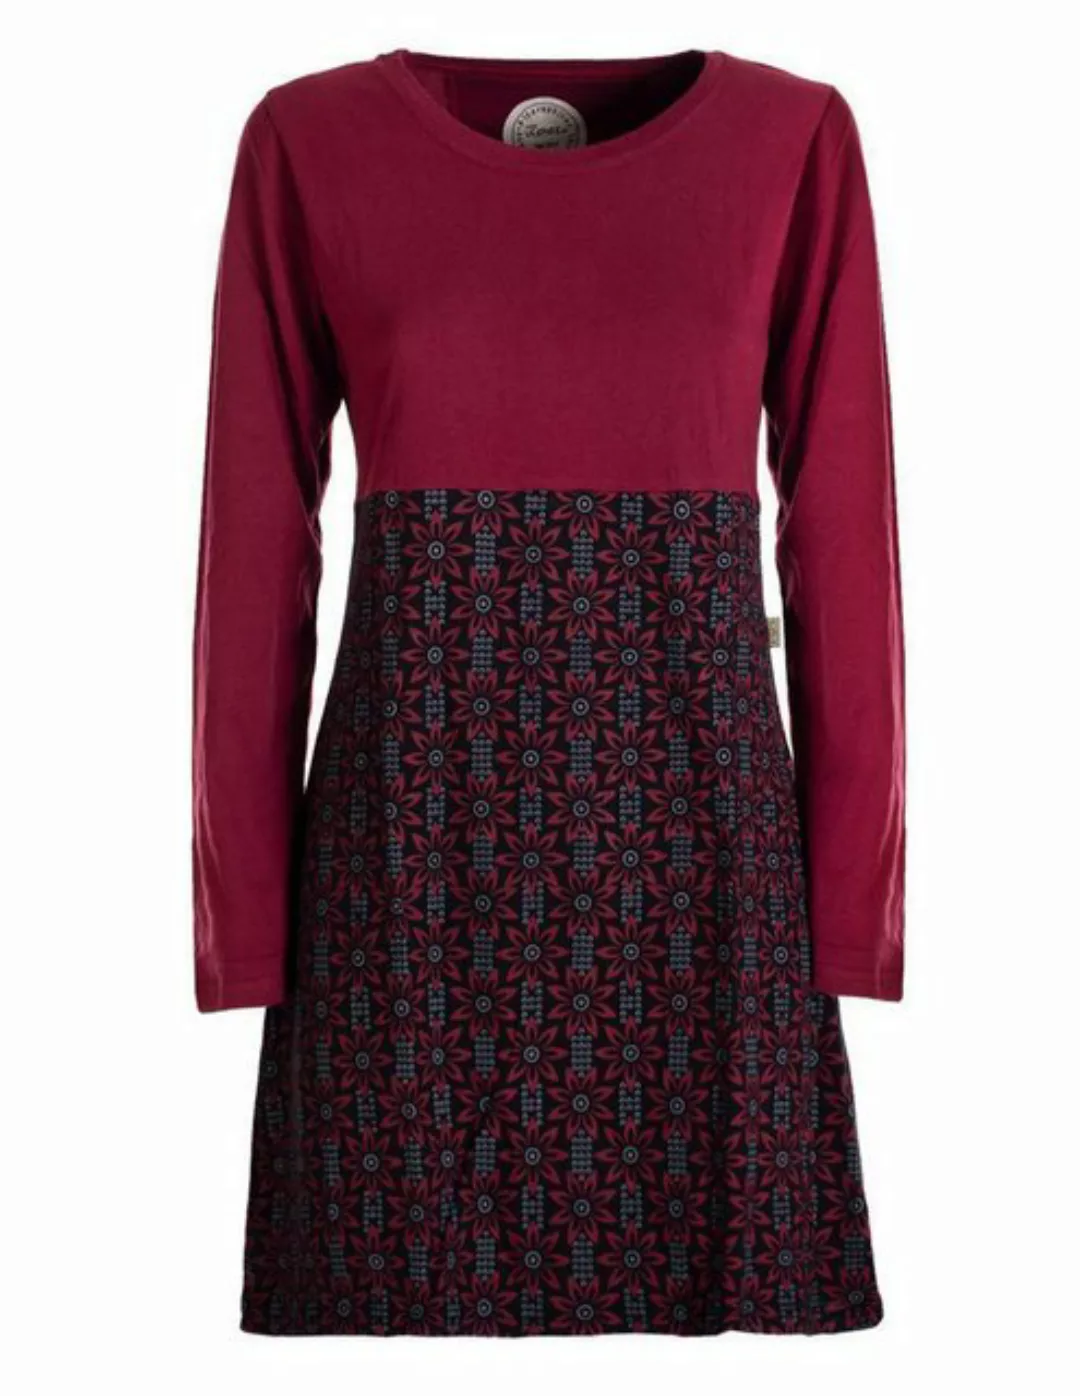 Vishes Tunikakleid Damen Langarm Longshirt-Kleid Sweatkleid Tunika-Kleid Sh günstig online kaufen